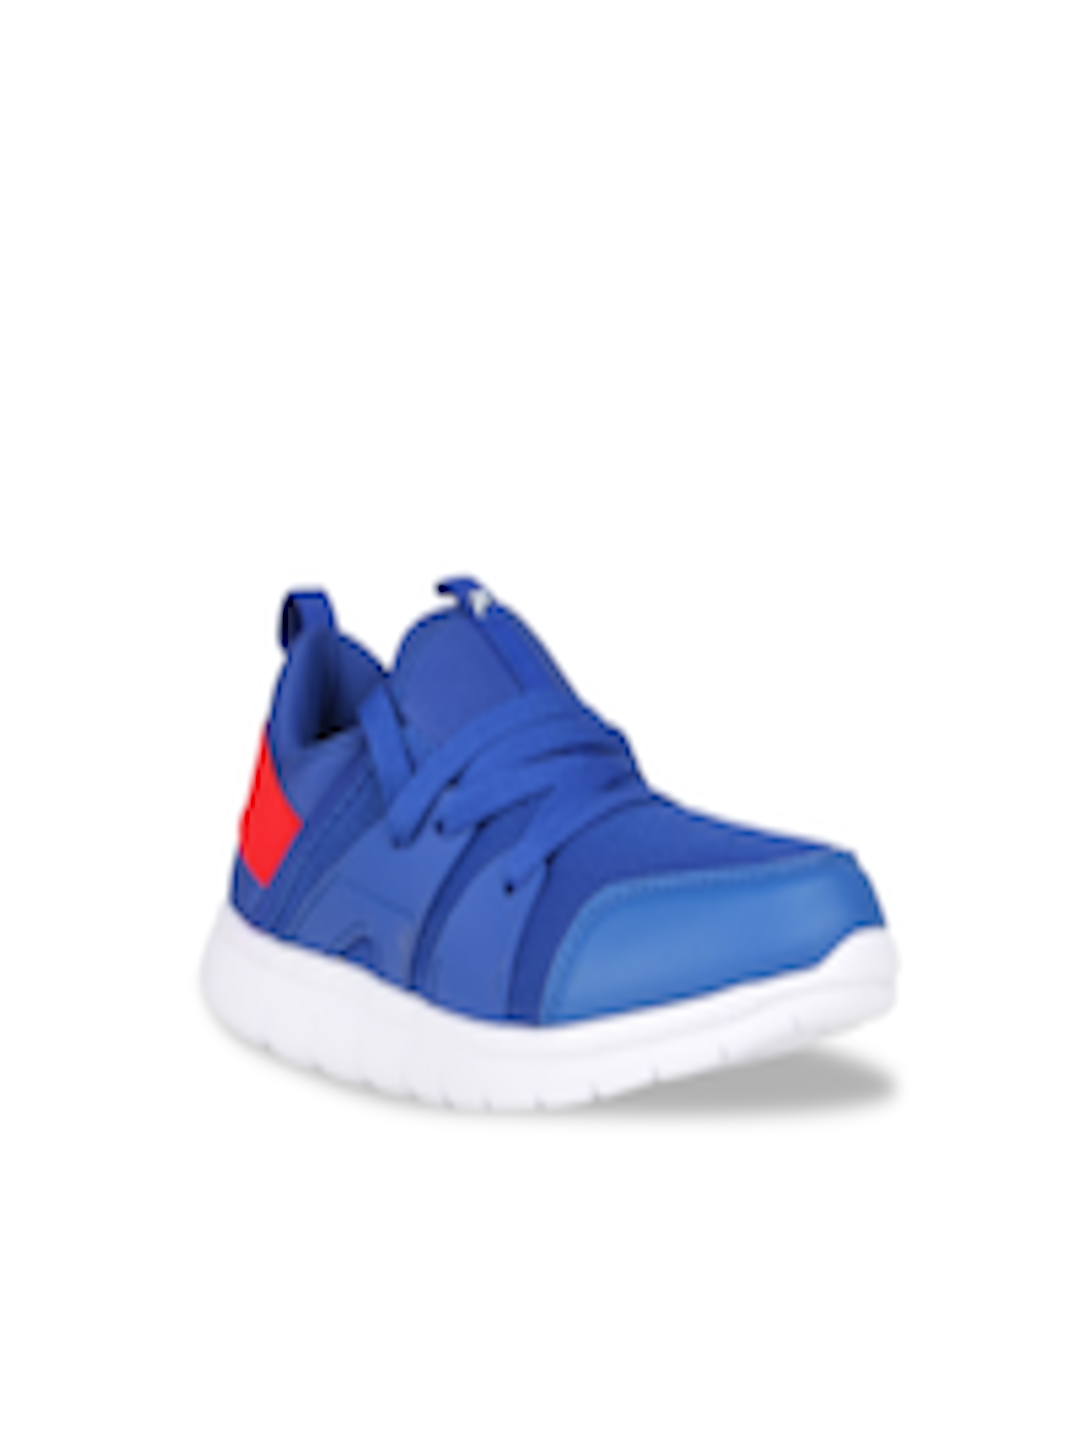 Buy FILA Unisex Kids Blue Sneakers - Casual Shoes for Unisex Kids